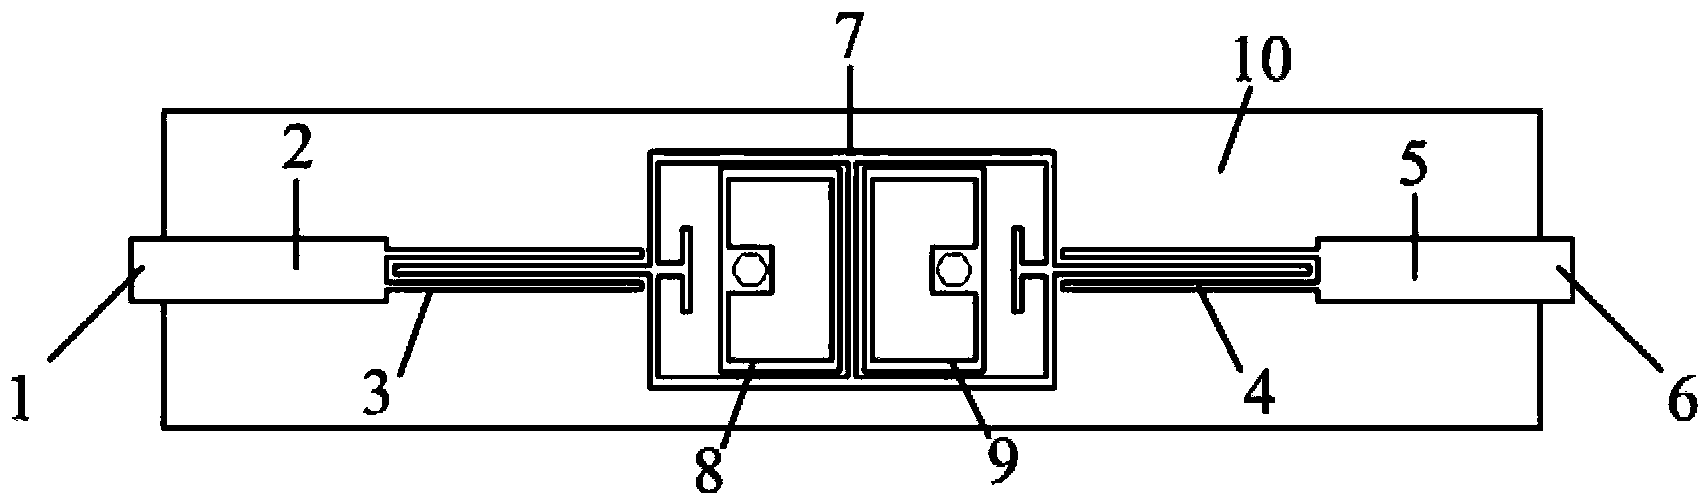 Toroidal cavity resonator based ultra wide band (UWB) notch filter